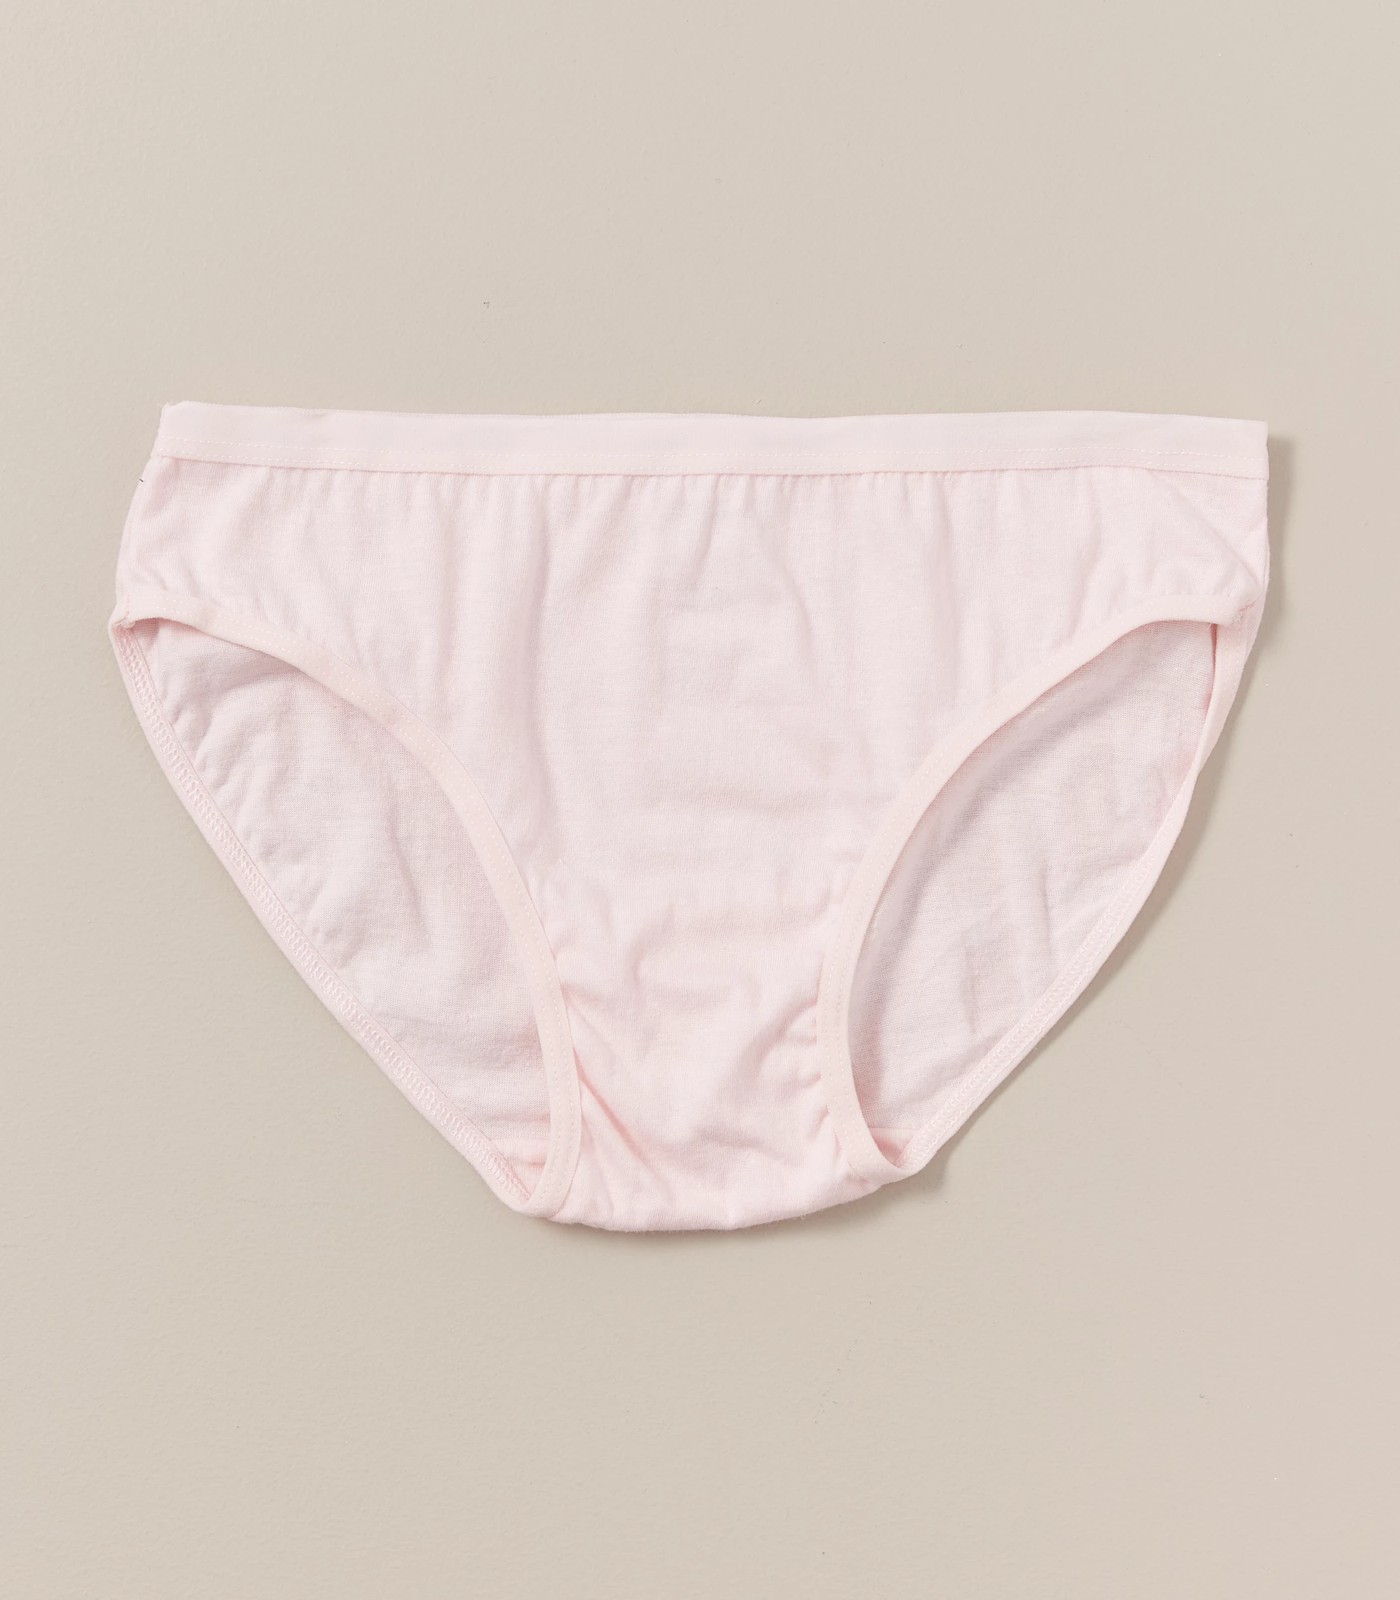 Target Catalogue Maxx Underwear 16 October Deals - Catalogue AU